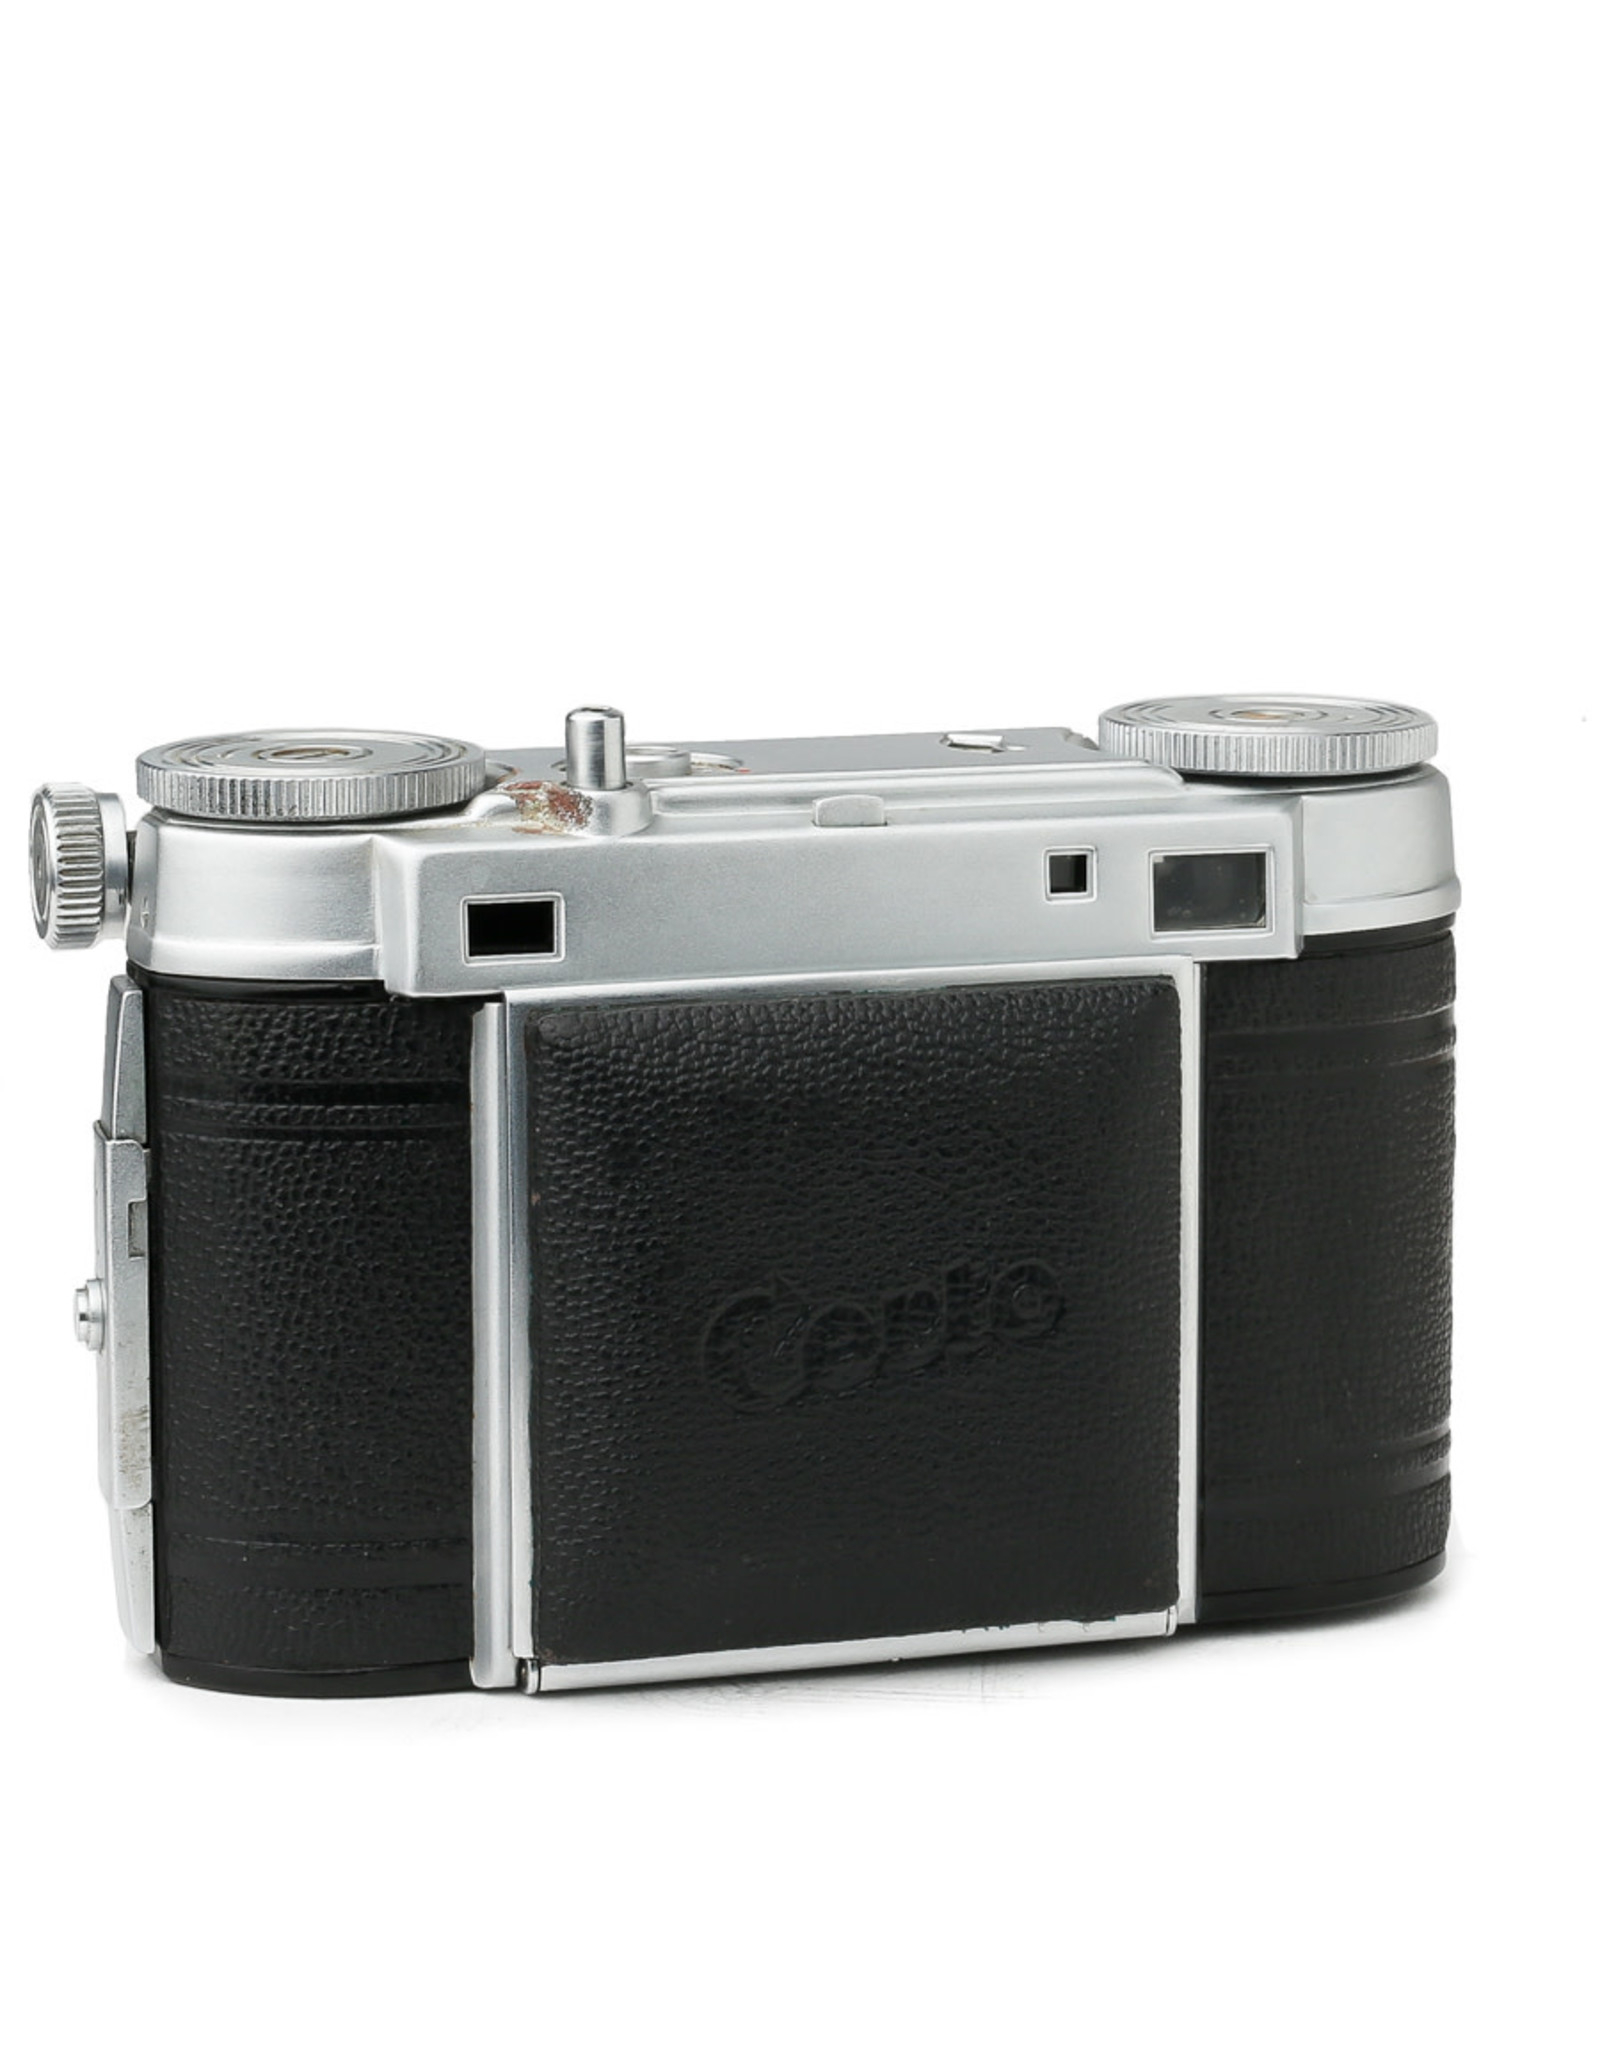 Zeiss CERTO Super Dollina II 35mm Rangefinder Camera w/Zeiss Jena Tessar  50mm f2.8